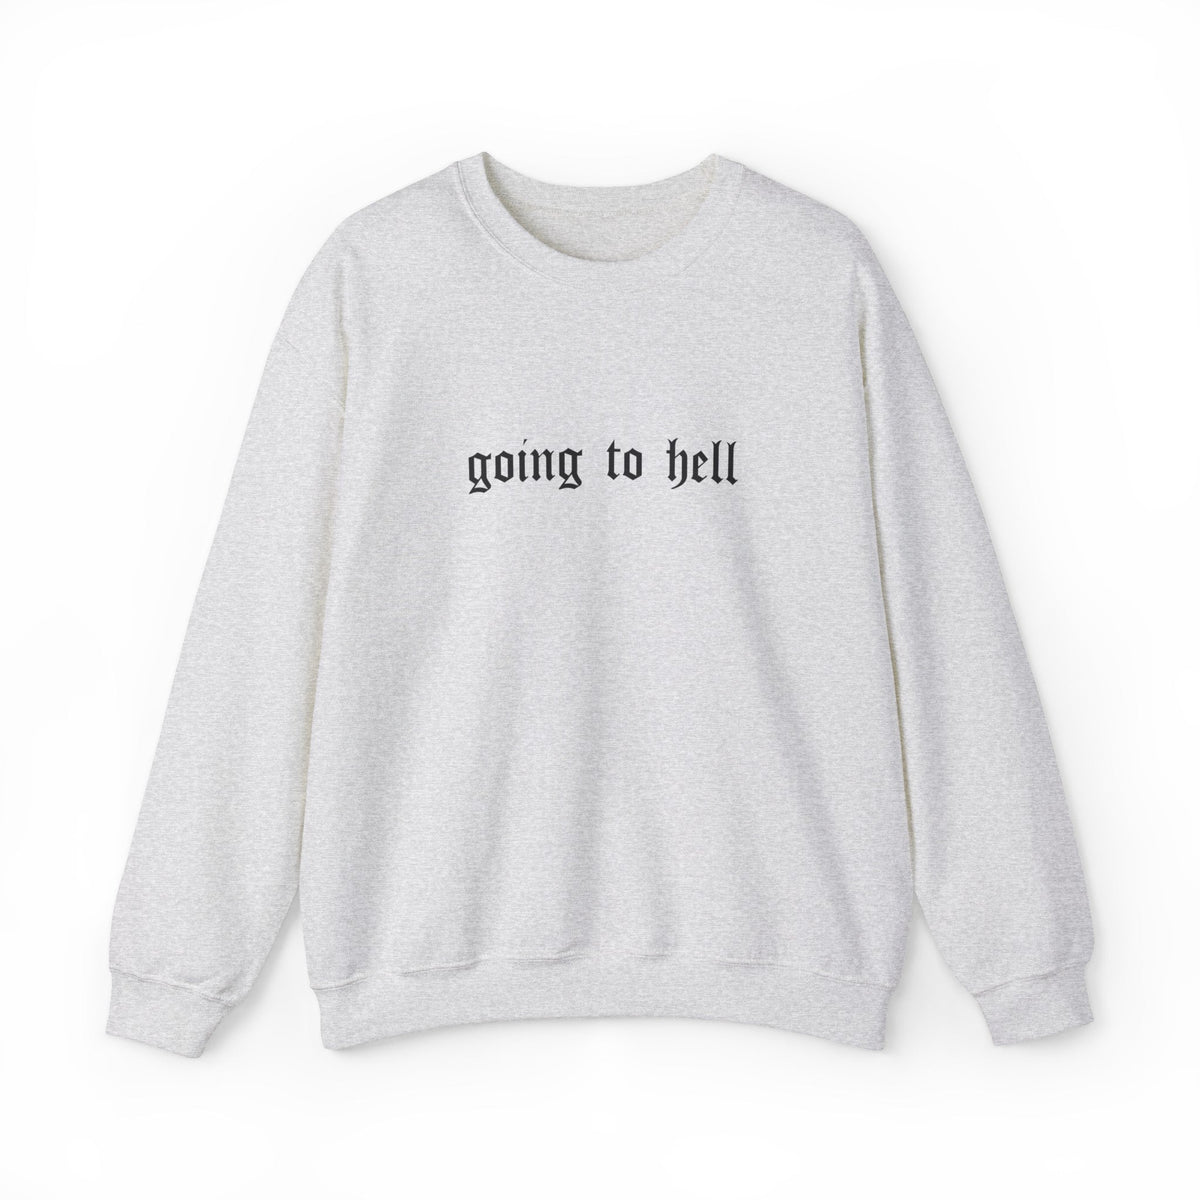 Going to Hell Crewneck Sweatshirt - Goth Cloth Co.Sweatshirt36668395512331379528